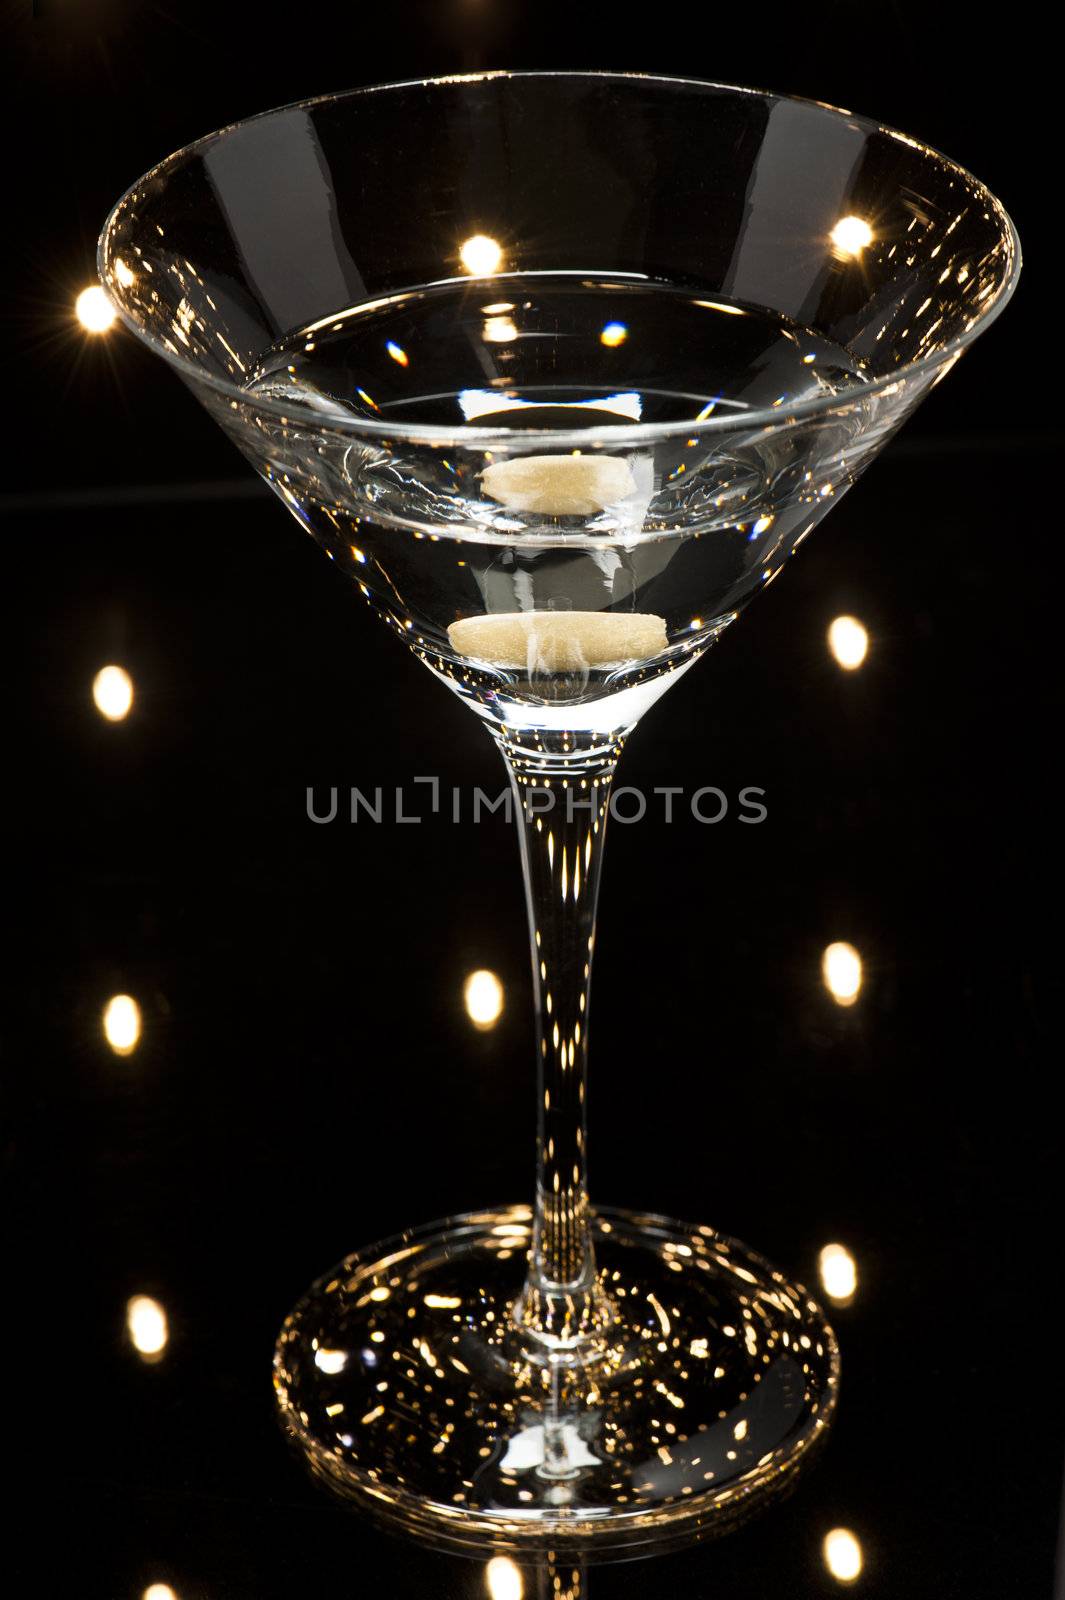 Martinis on the dance floor with nice illumination